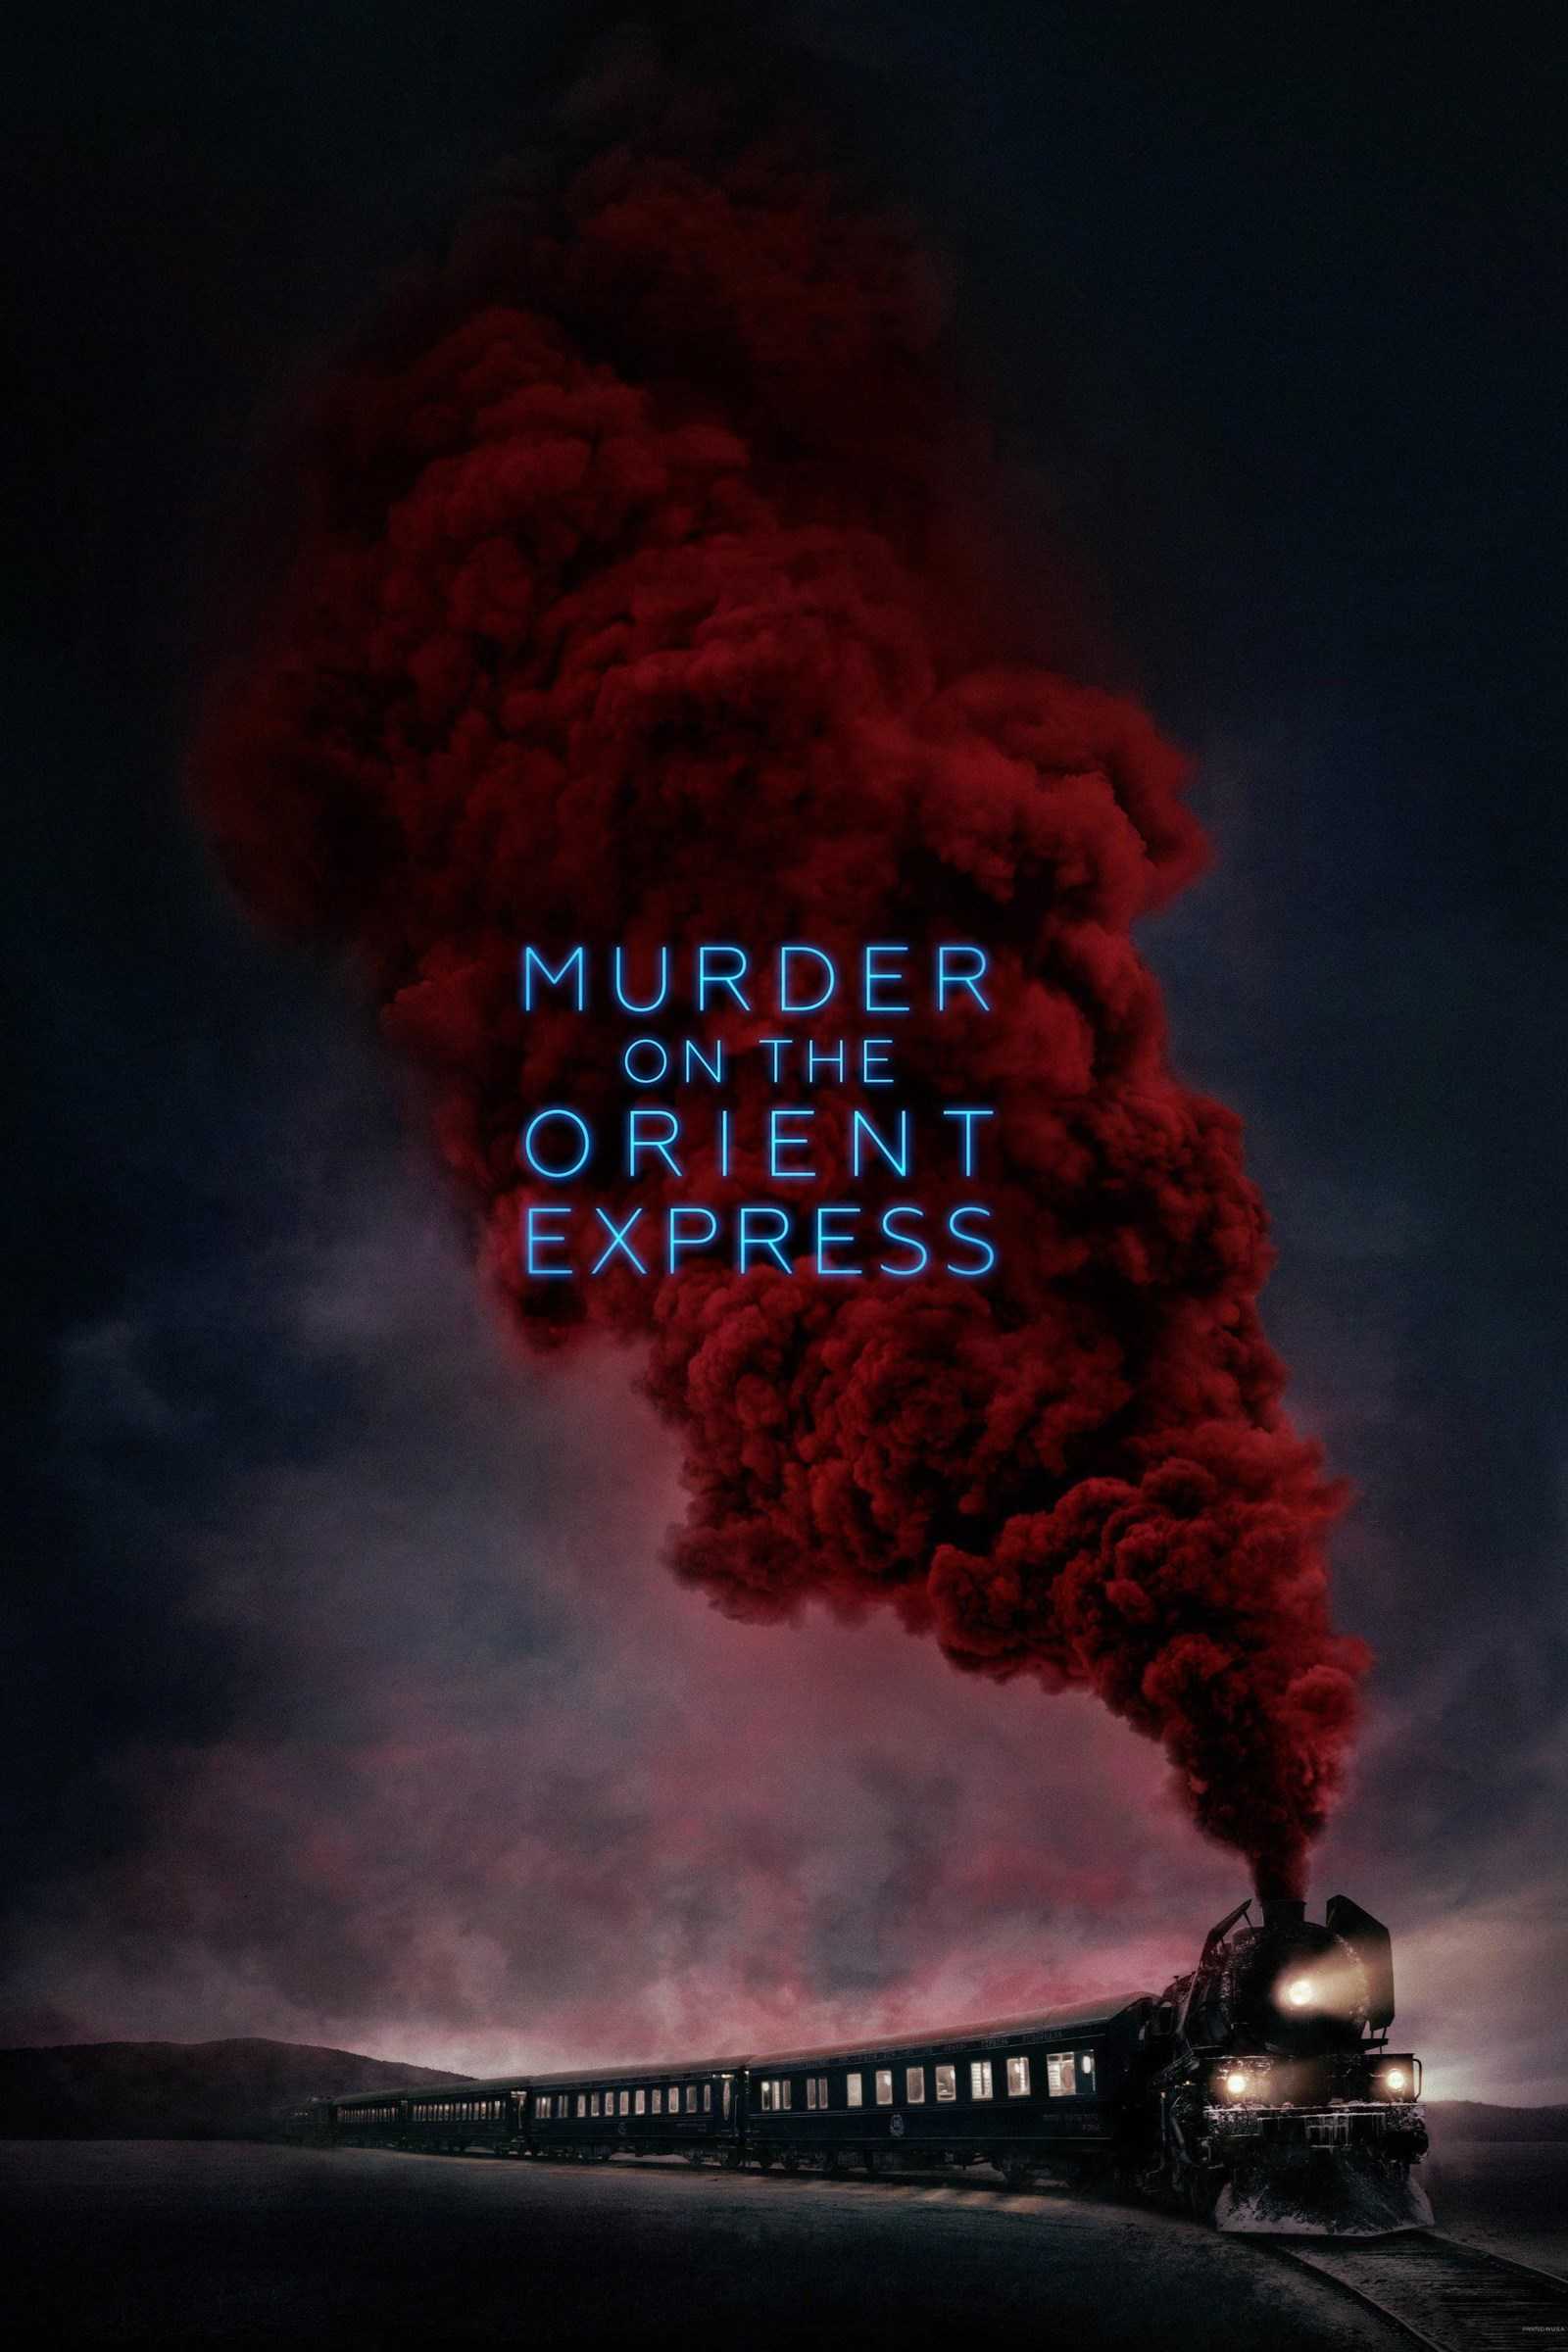 مشاهدة فيلم Murder on the Orient Express 2017 مترجم